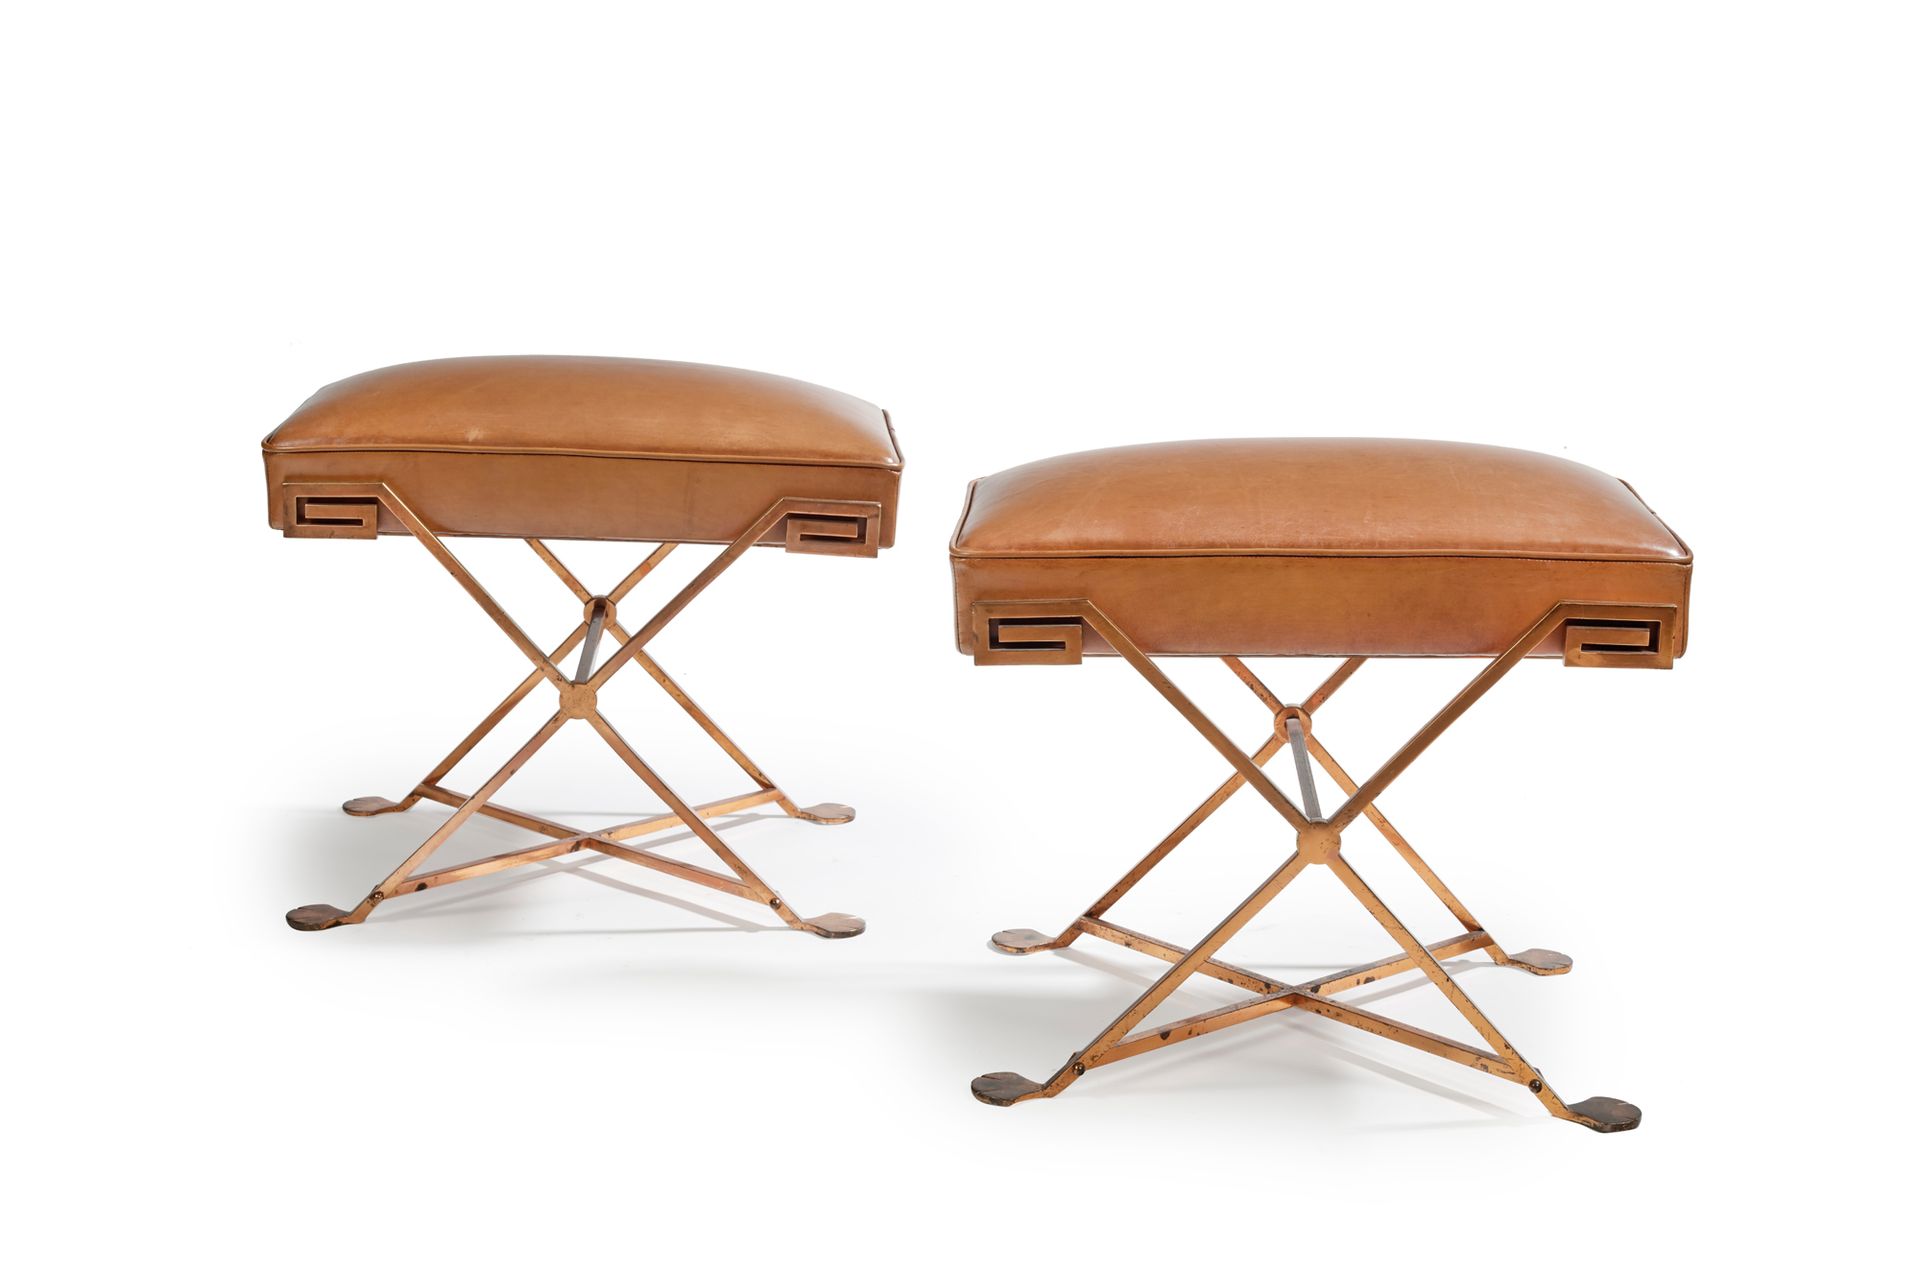 MARCEL COARD (1889-1974) 


一对铜质 "X "型腿的凳子，带有铜锈，棕色皮革装饰。



约1930年



高：44厘米，宽：54&hellip;